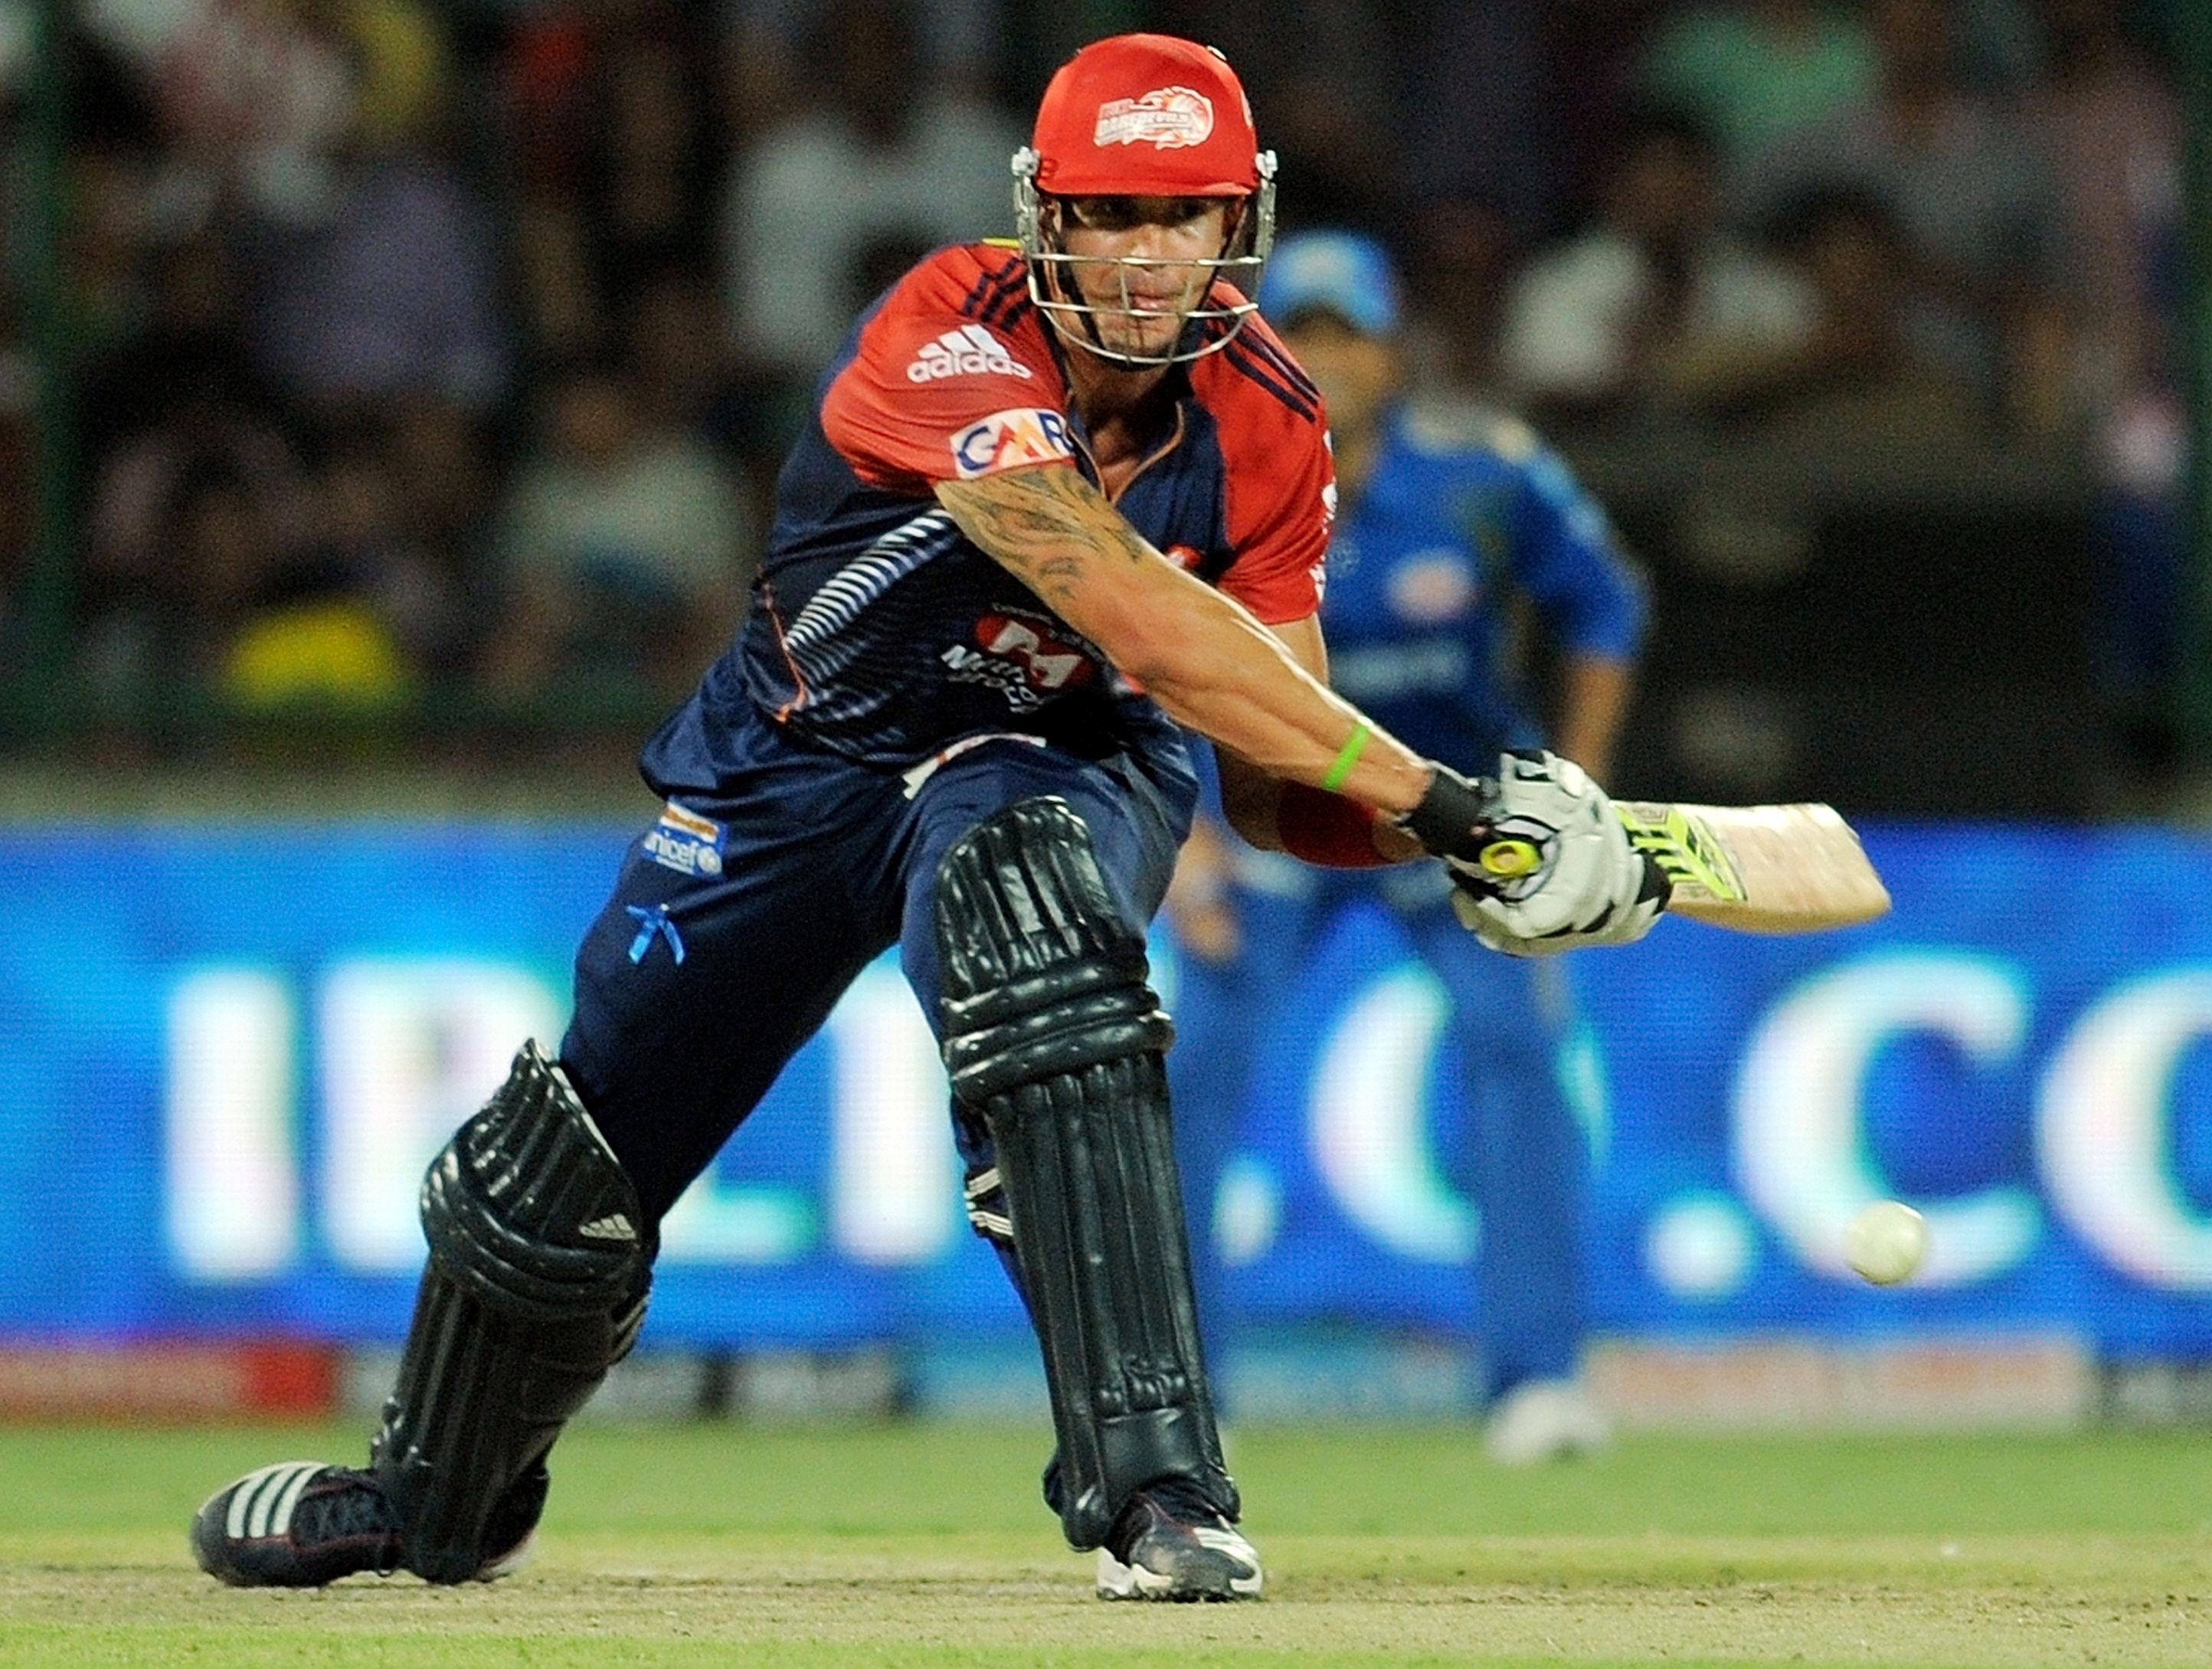 Delhi Daredevils batsman Kevin Pietersen